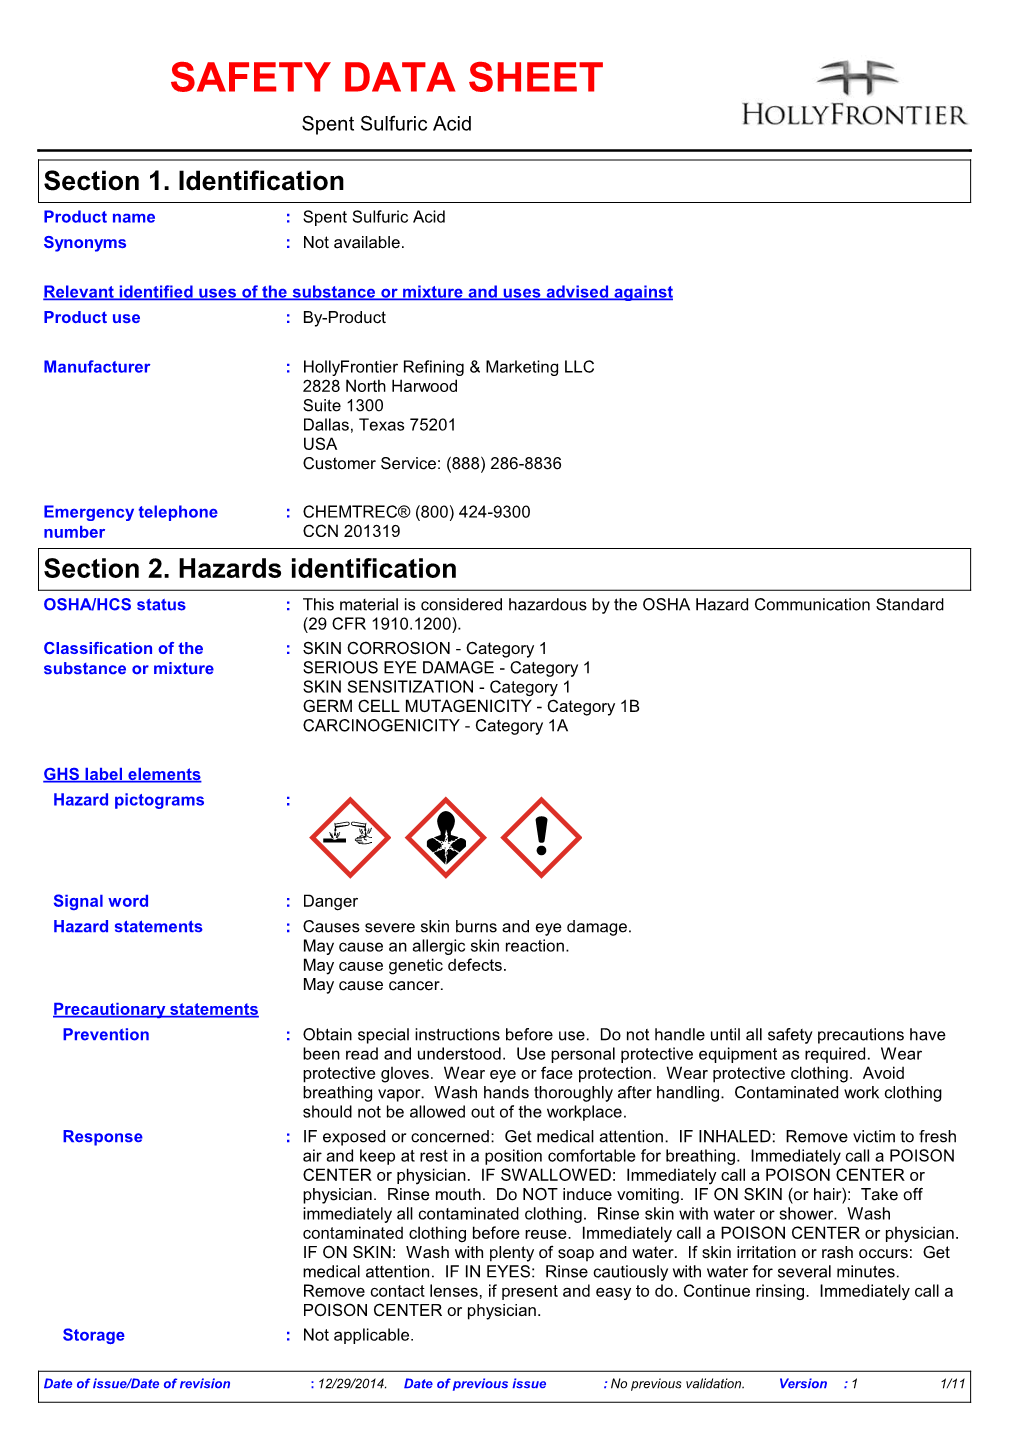 Spent Sulfuric Acid HFC.Pdf